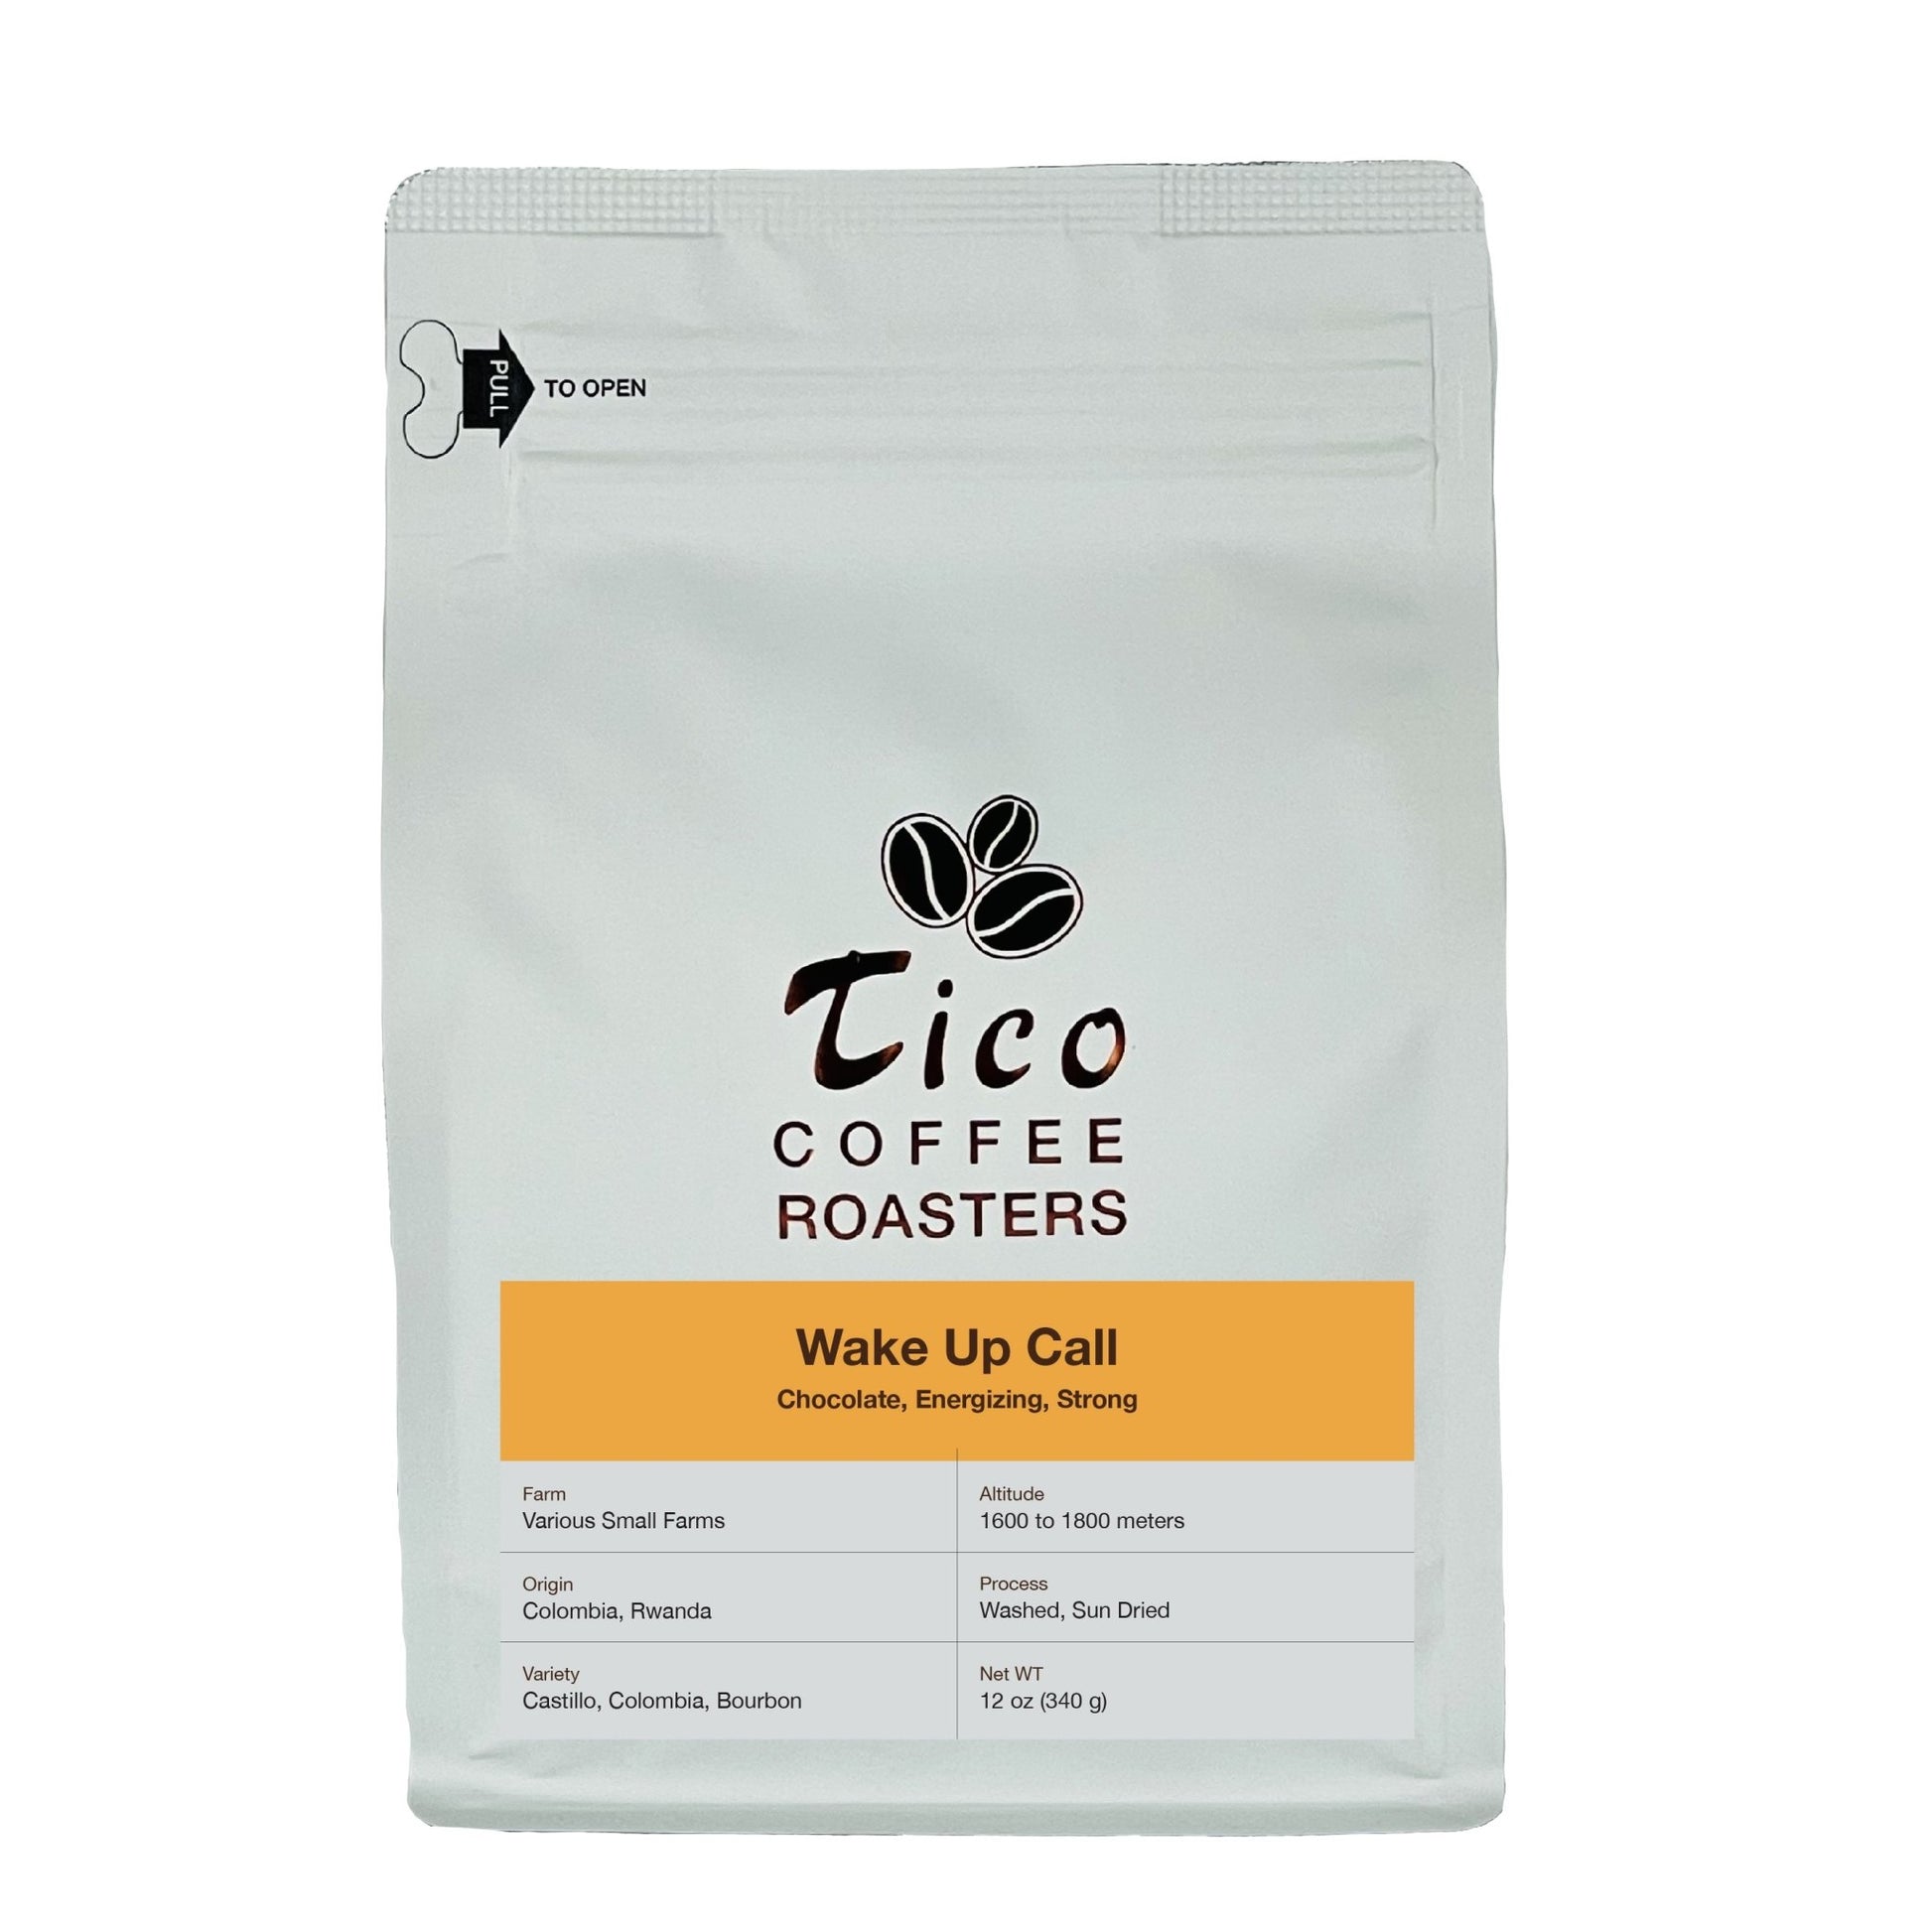 Wake Up Call - Tico Coffee Roasters